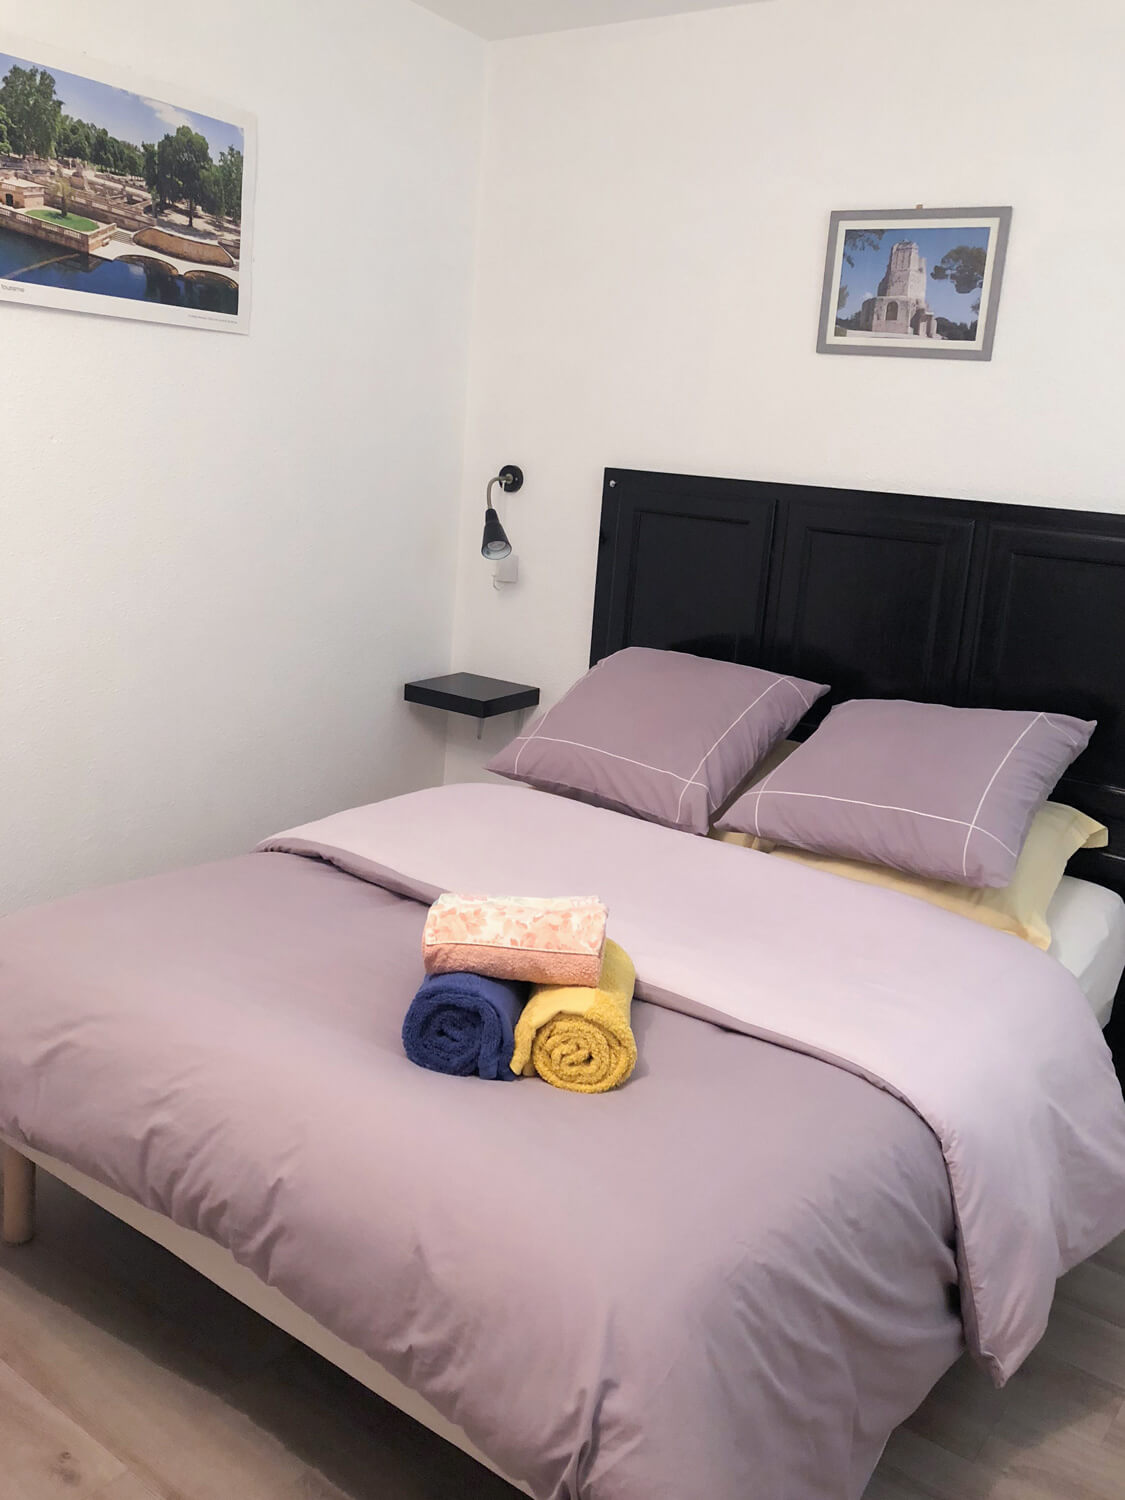 location airbnb nimes france europe logement